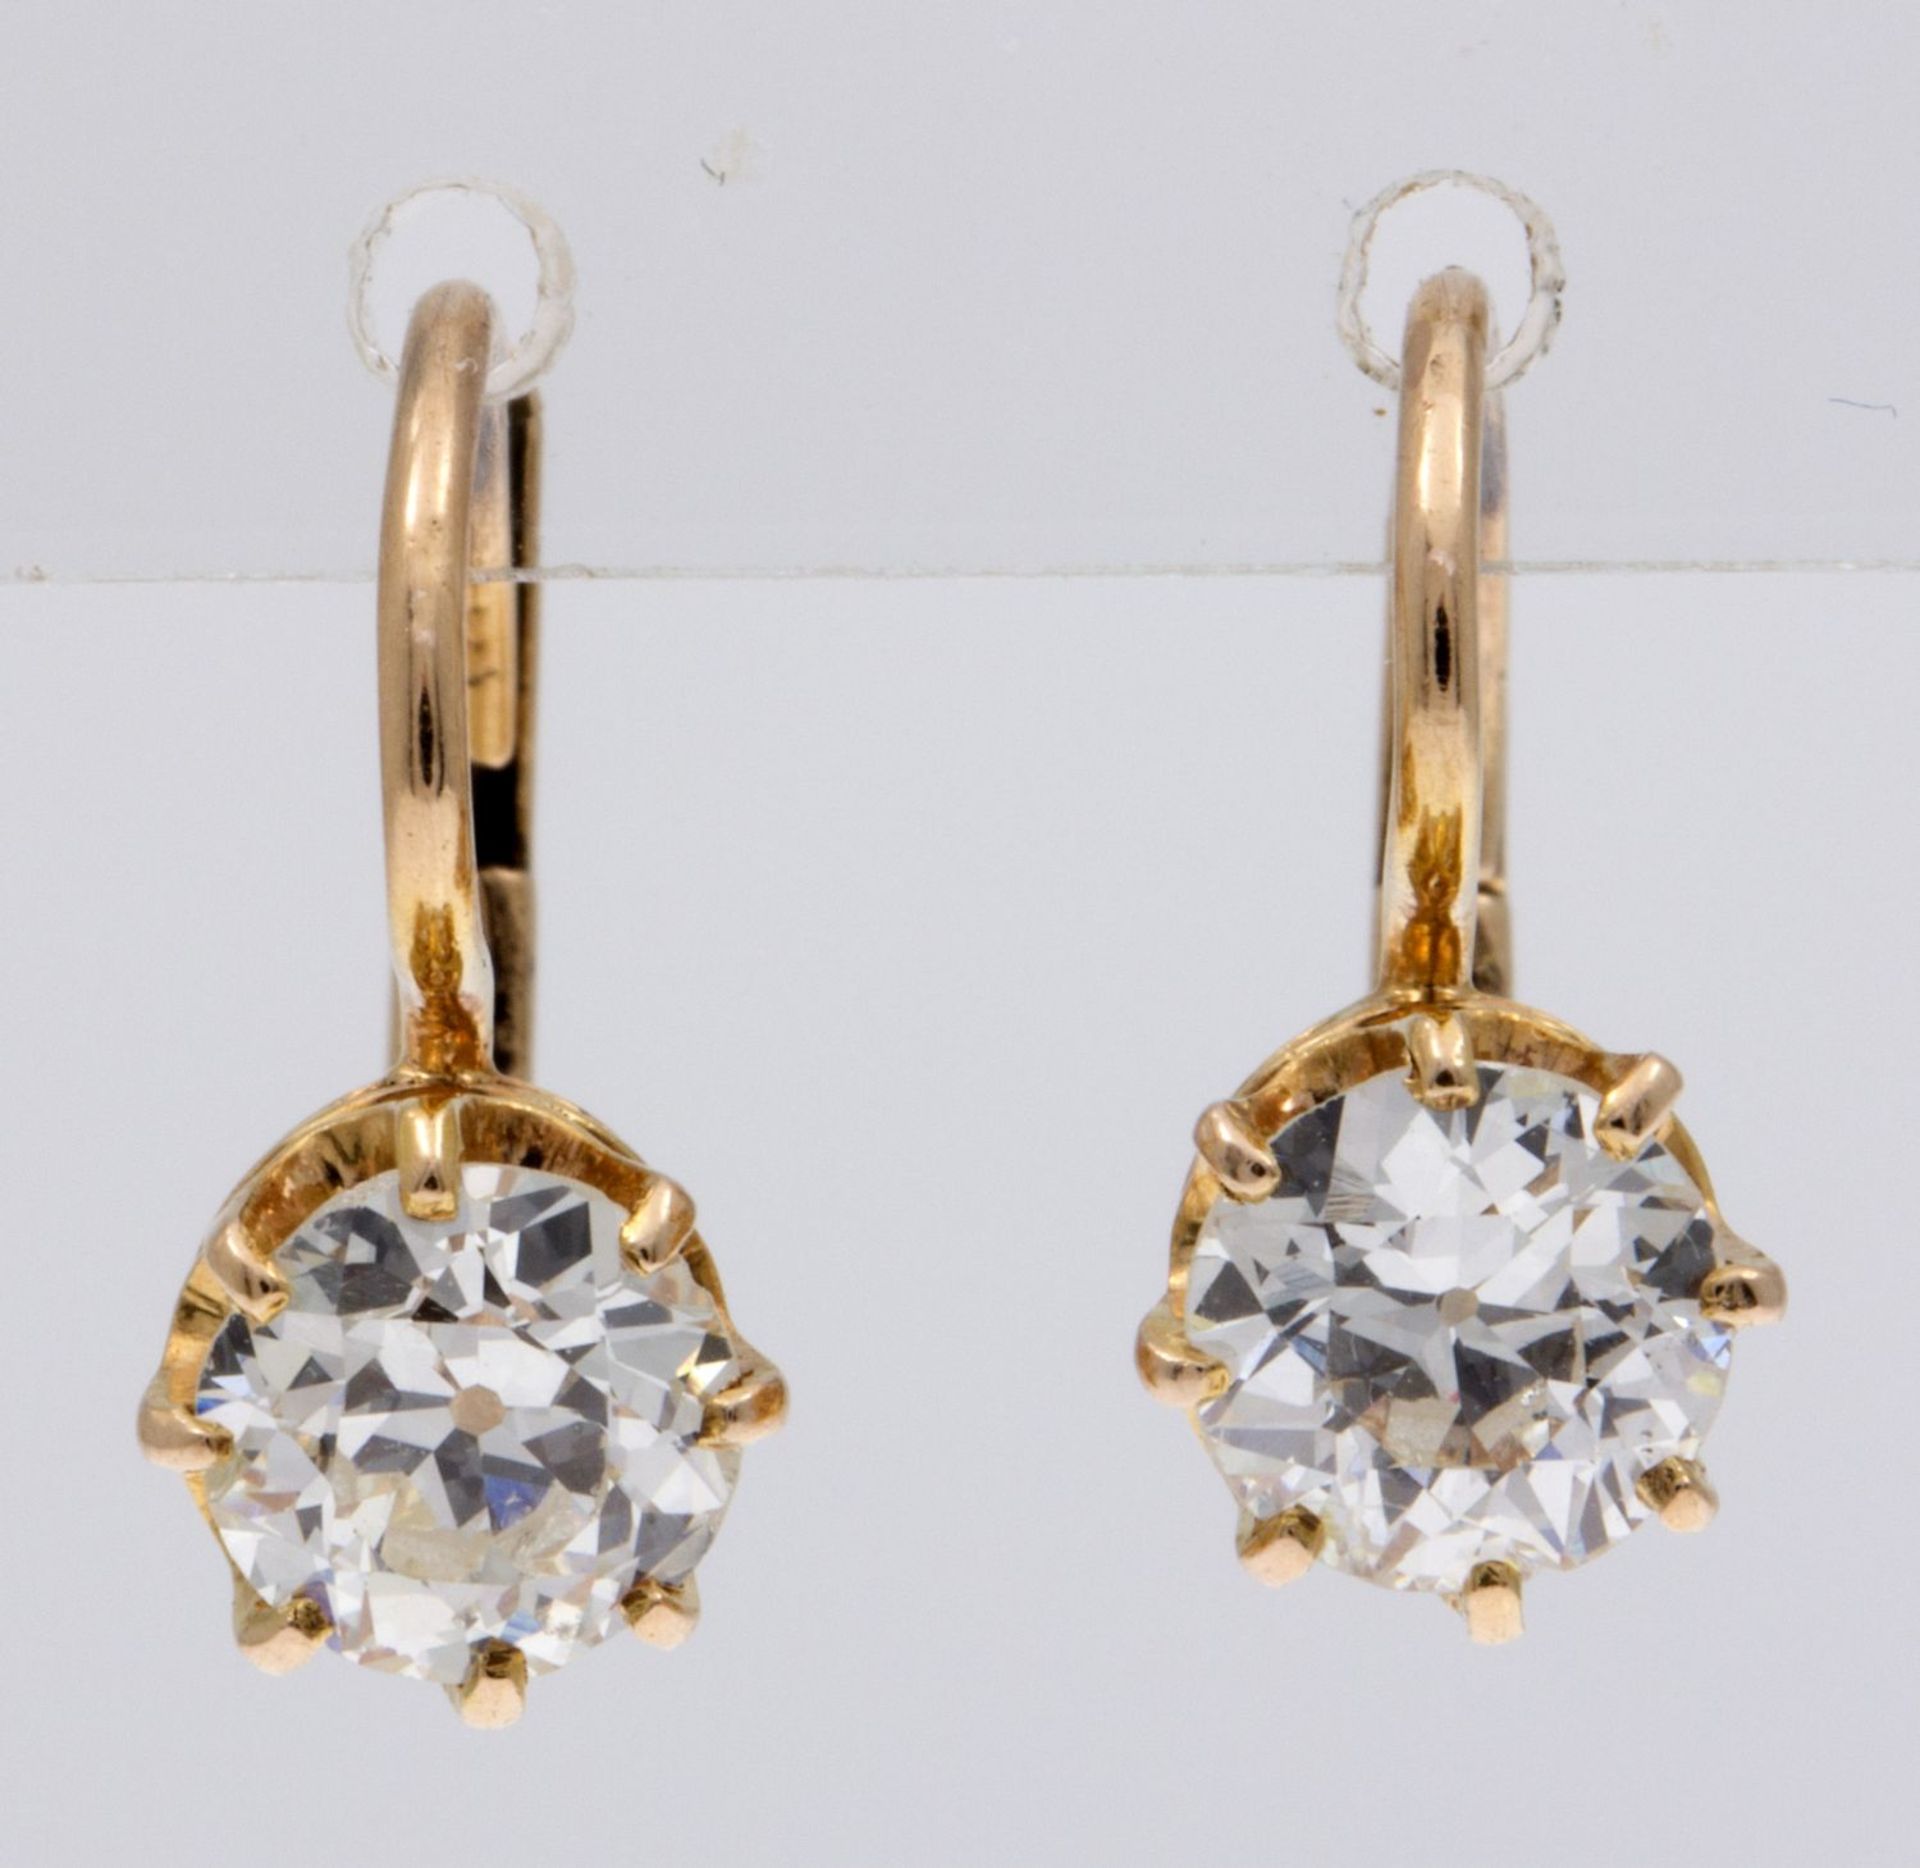 Ein Paar Solitär-Diamant-Ohrgehänge